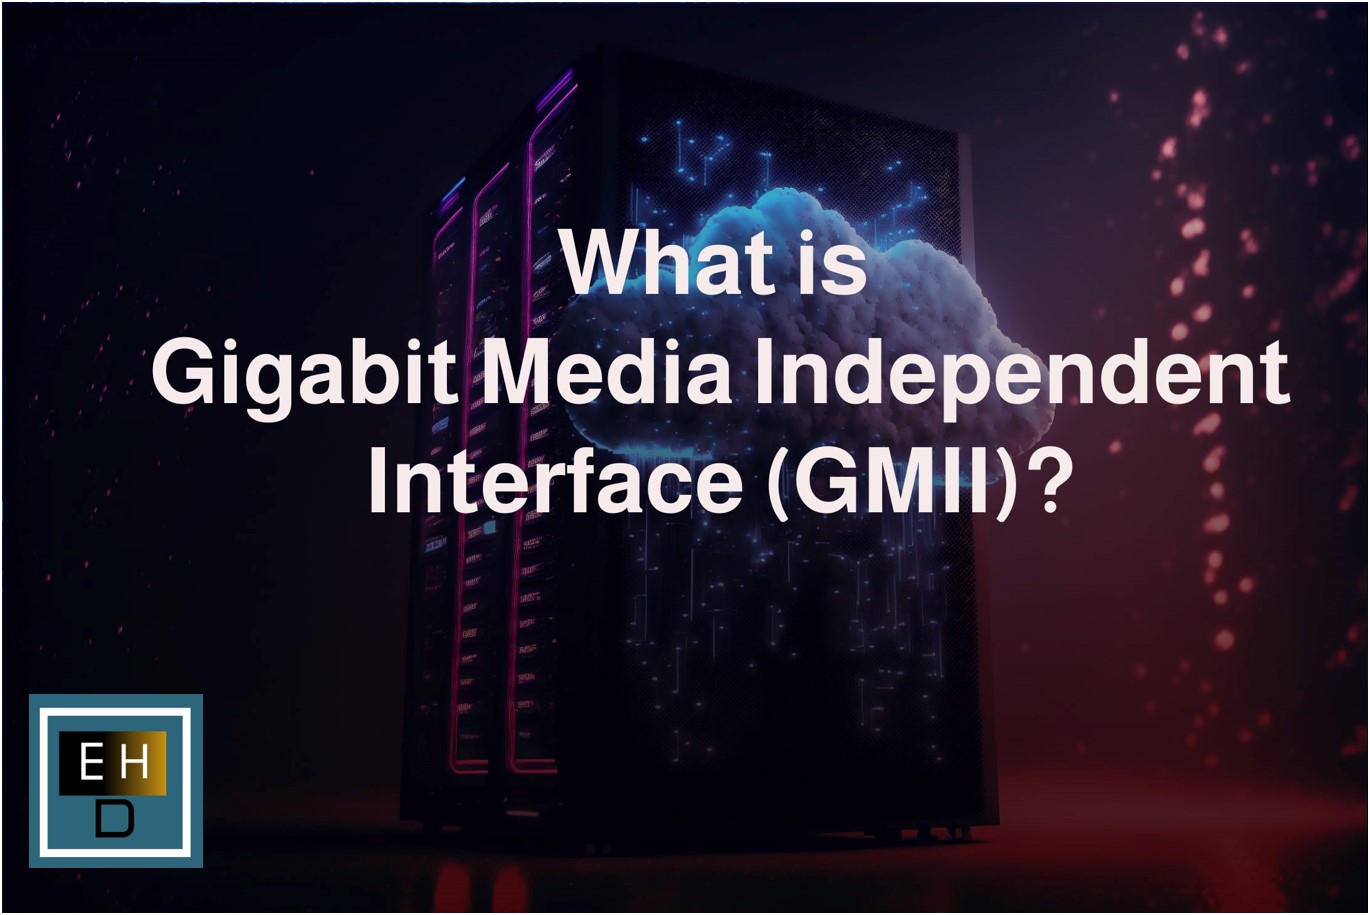 What is Gigabit Media Independent Interface (GMII)?